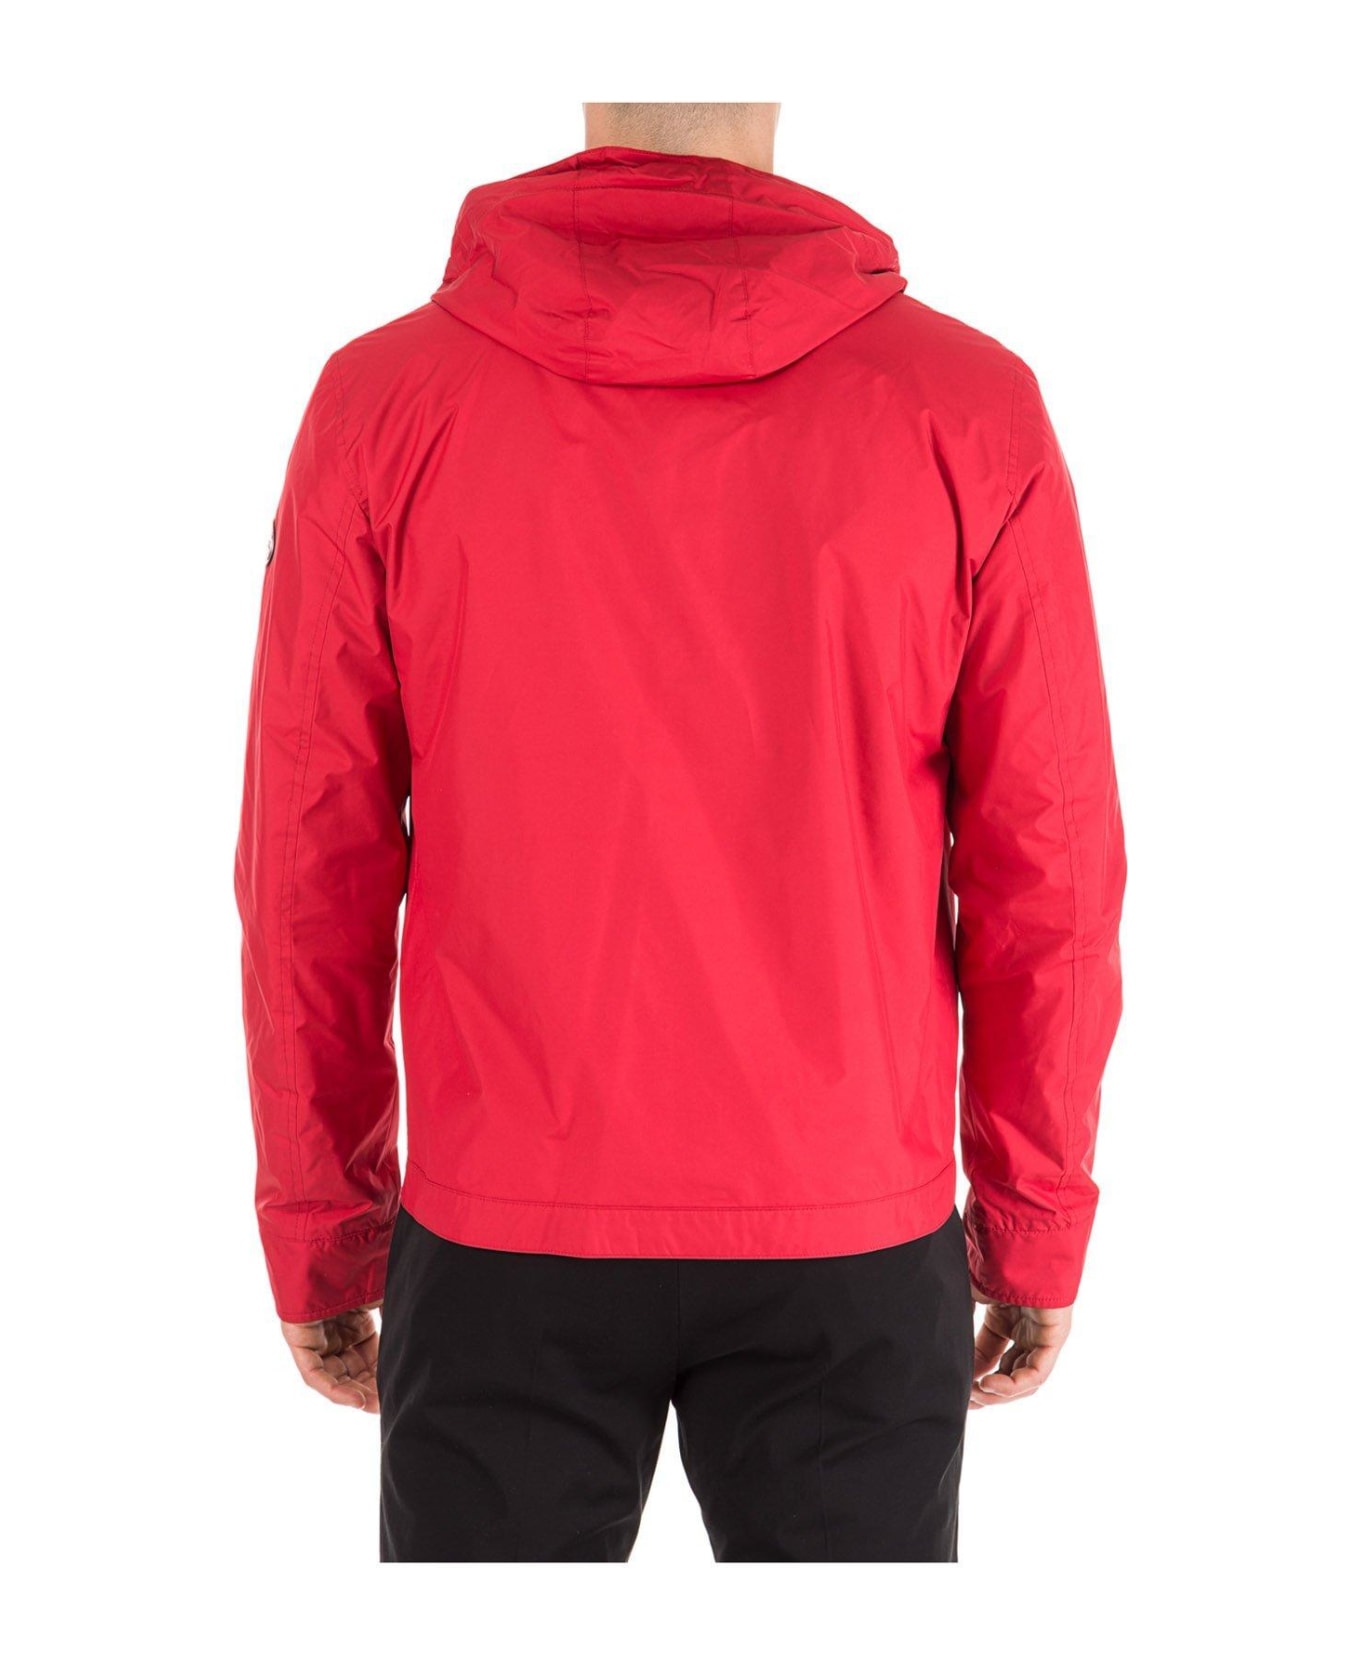 Michael Kors Tech Hooded Zip Jacket - red